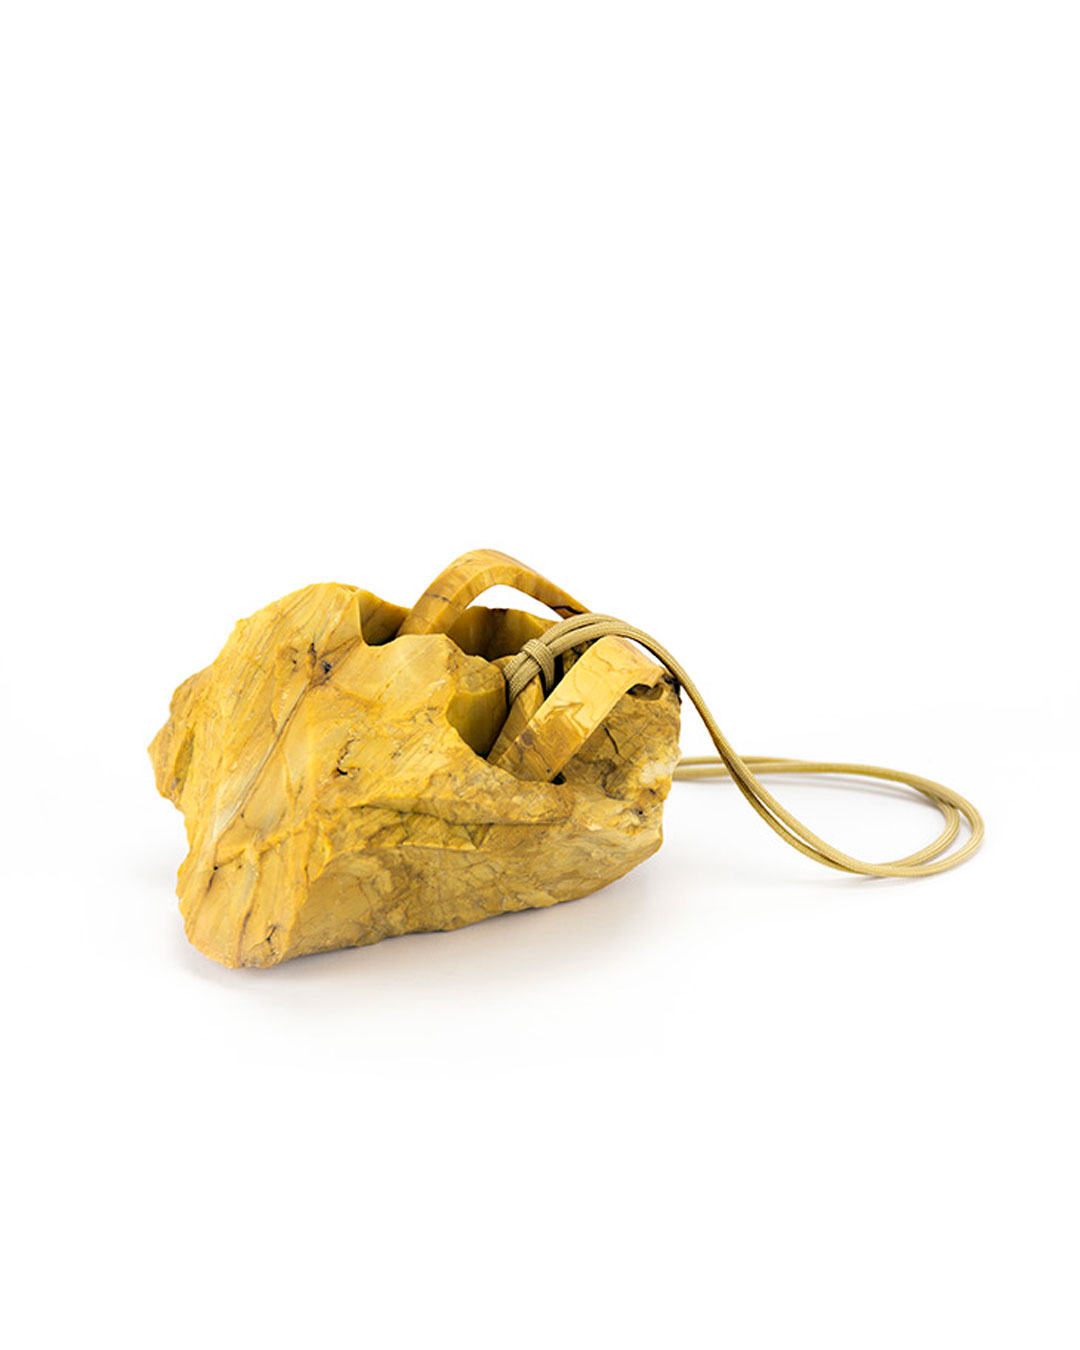 Edu Tarín, G0E2, 2018, pendant and object; yellow jasper , 90 x 70 x 55 mm, €5200 (image 2/2)